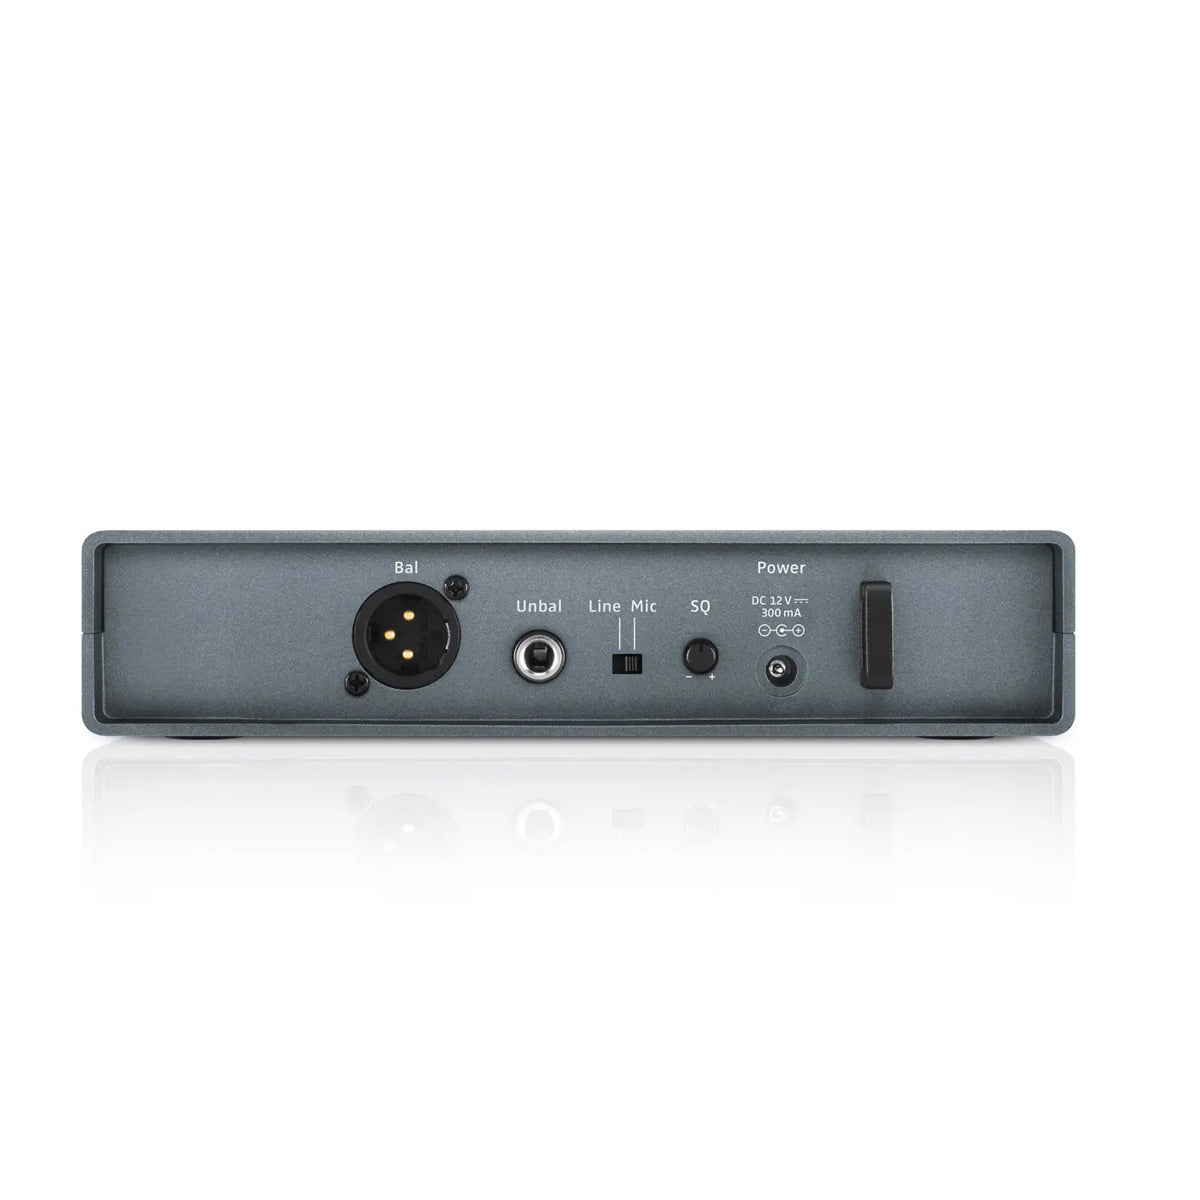 Sennheiser XSW 1-825-B Wireless Handheld Vocal Set, 10 Ch UHF, 614-638MHz